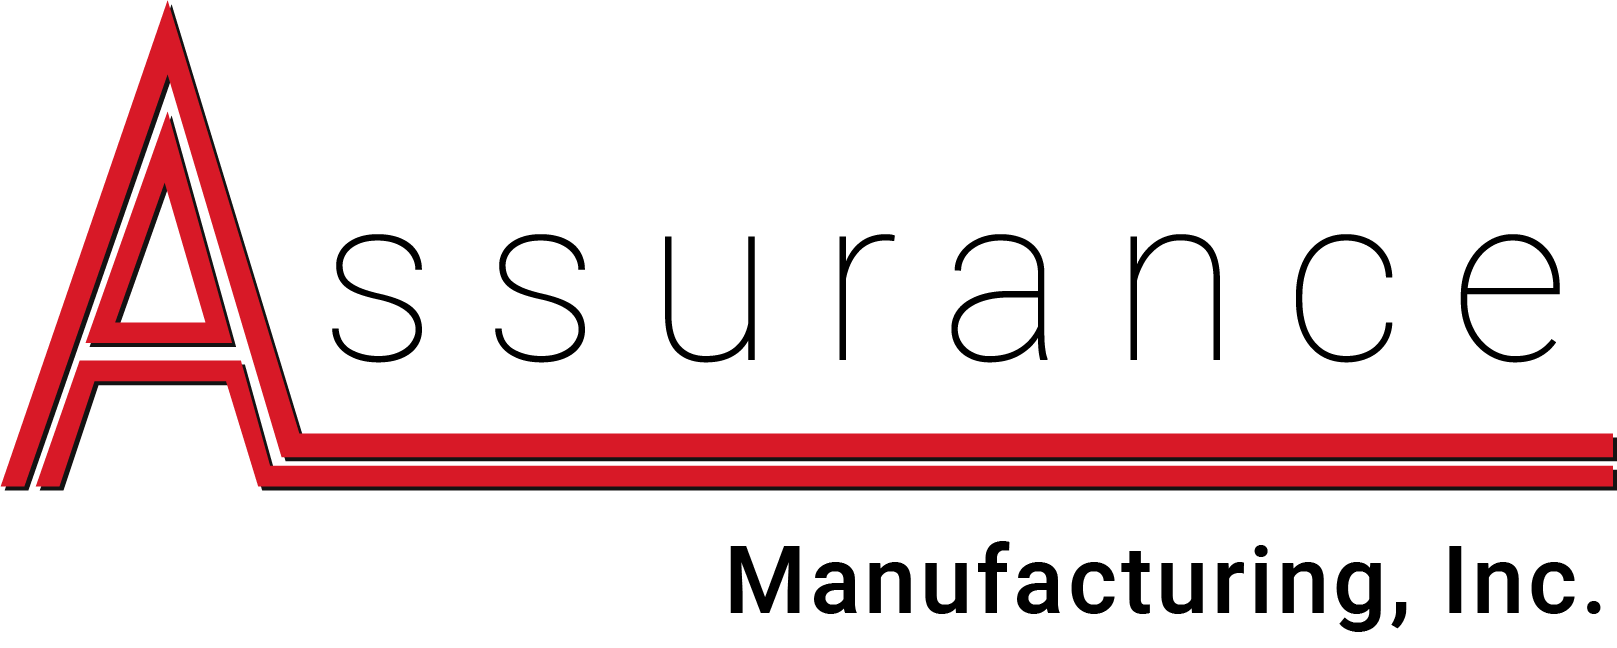 Assurance Manufacturing, Inc. Logo